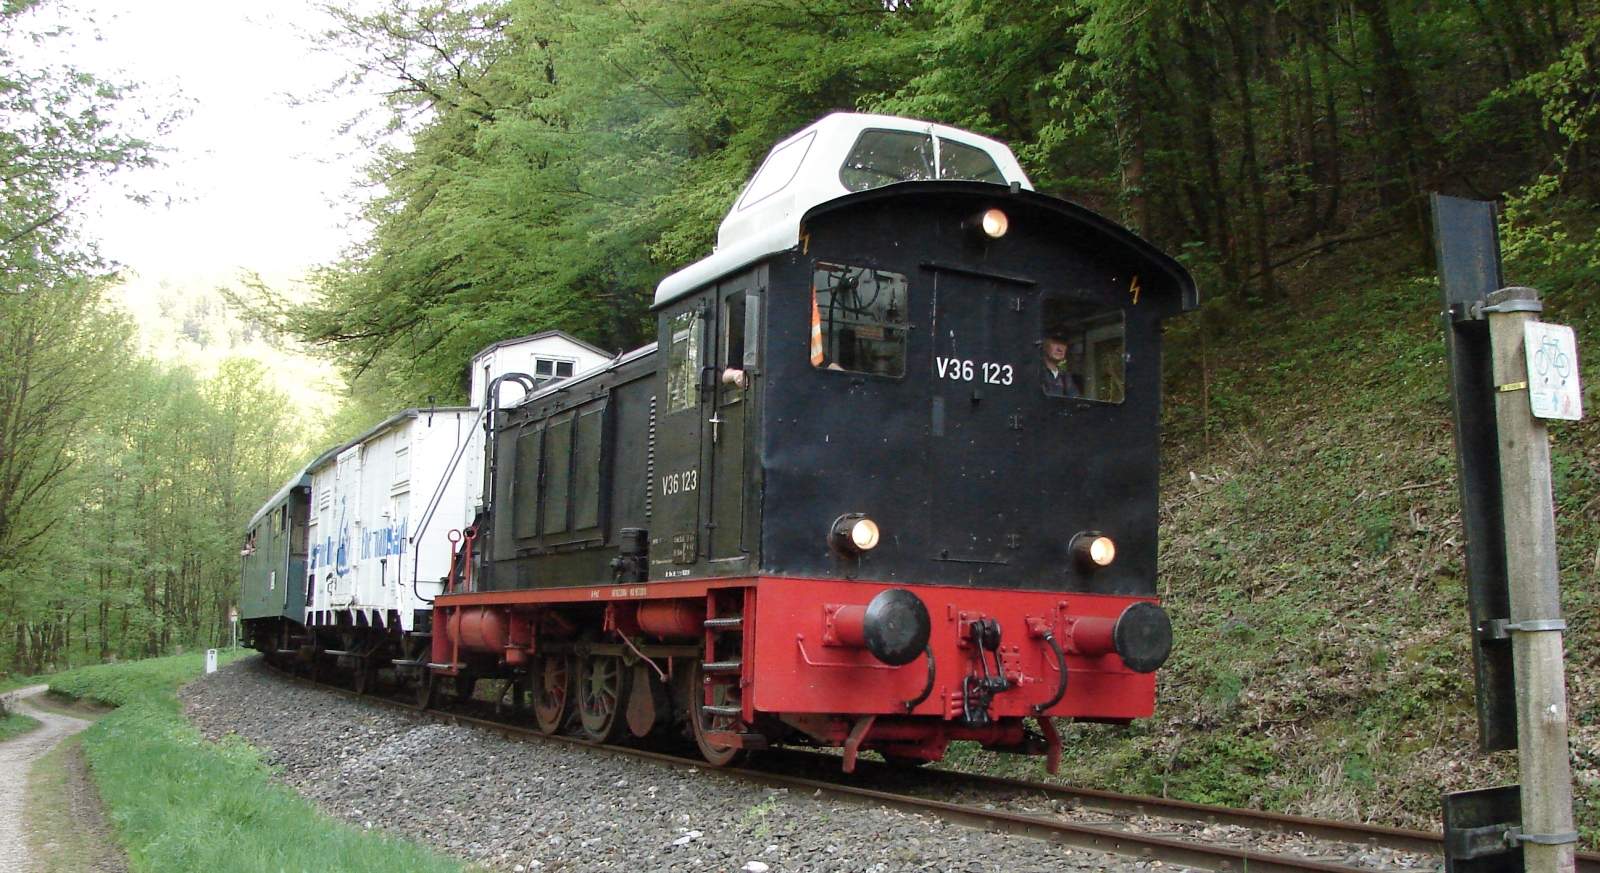 WR 360 C 14 as V 36 123 of the Dampfbahn Fränkische Schweiz with an elevated cab